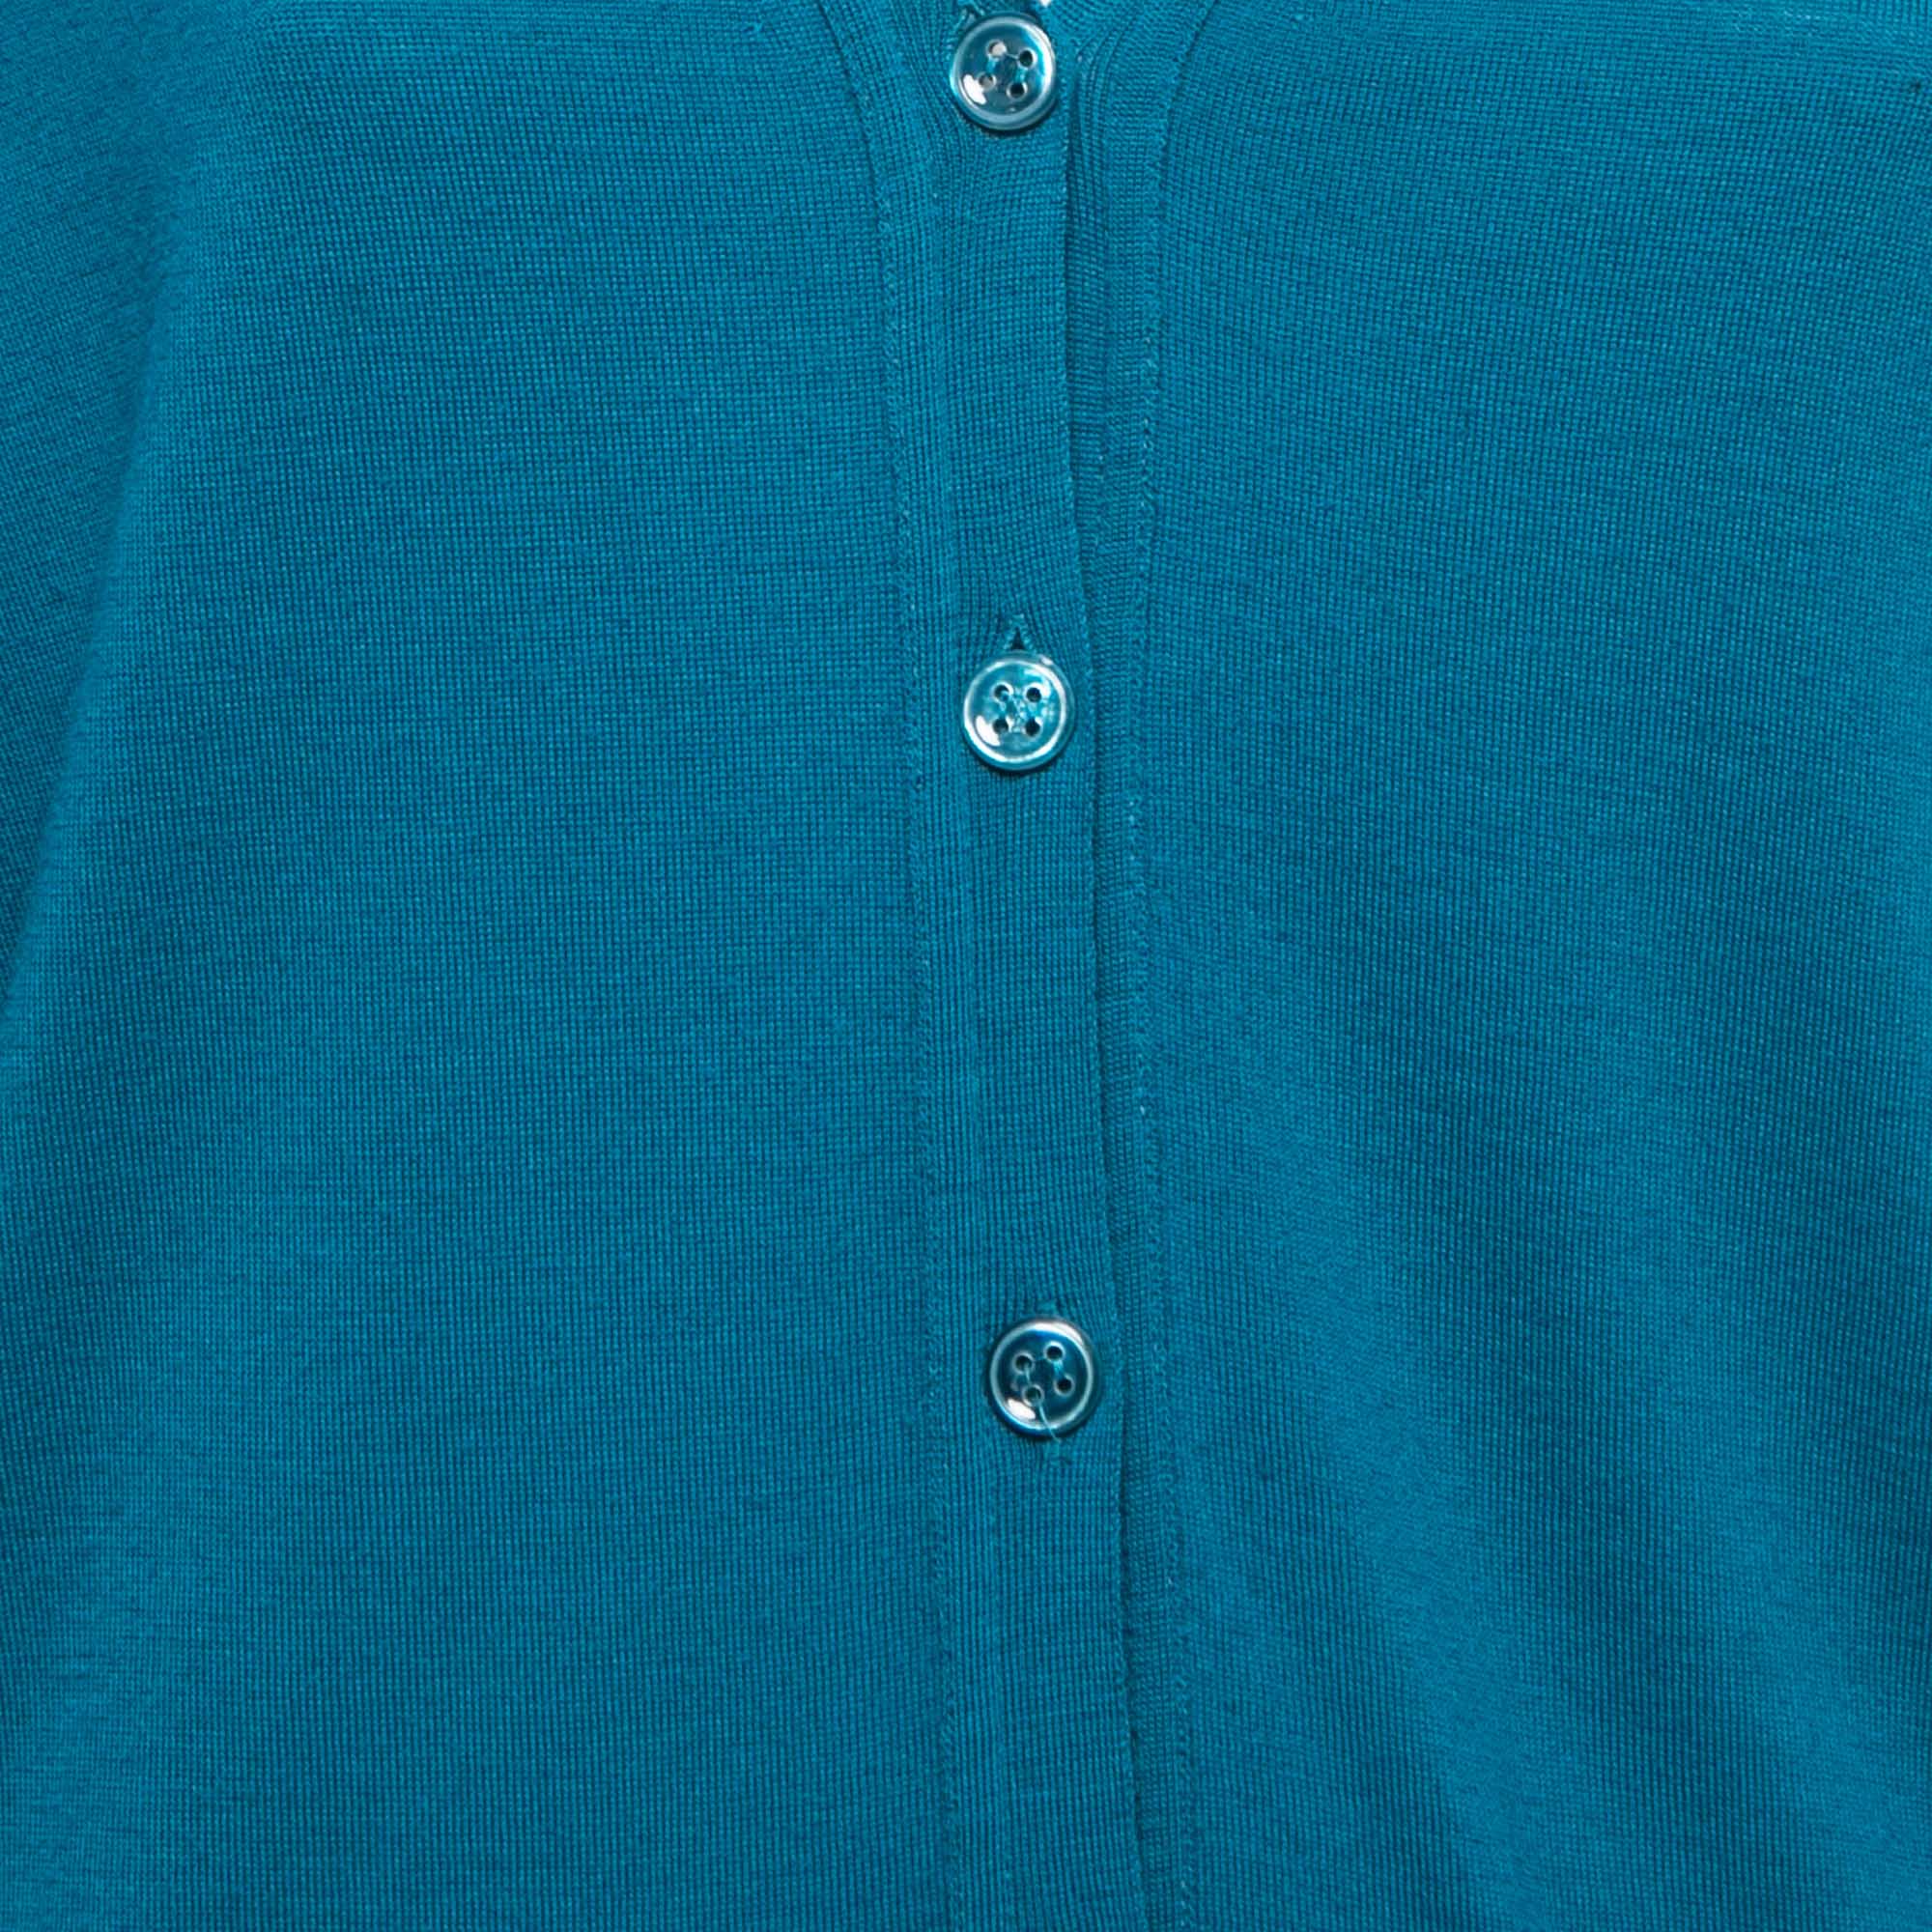 Yves Saint Laurent Blue Wool Knit Button Front Cardigan S